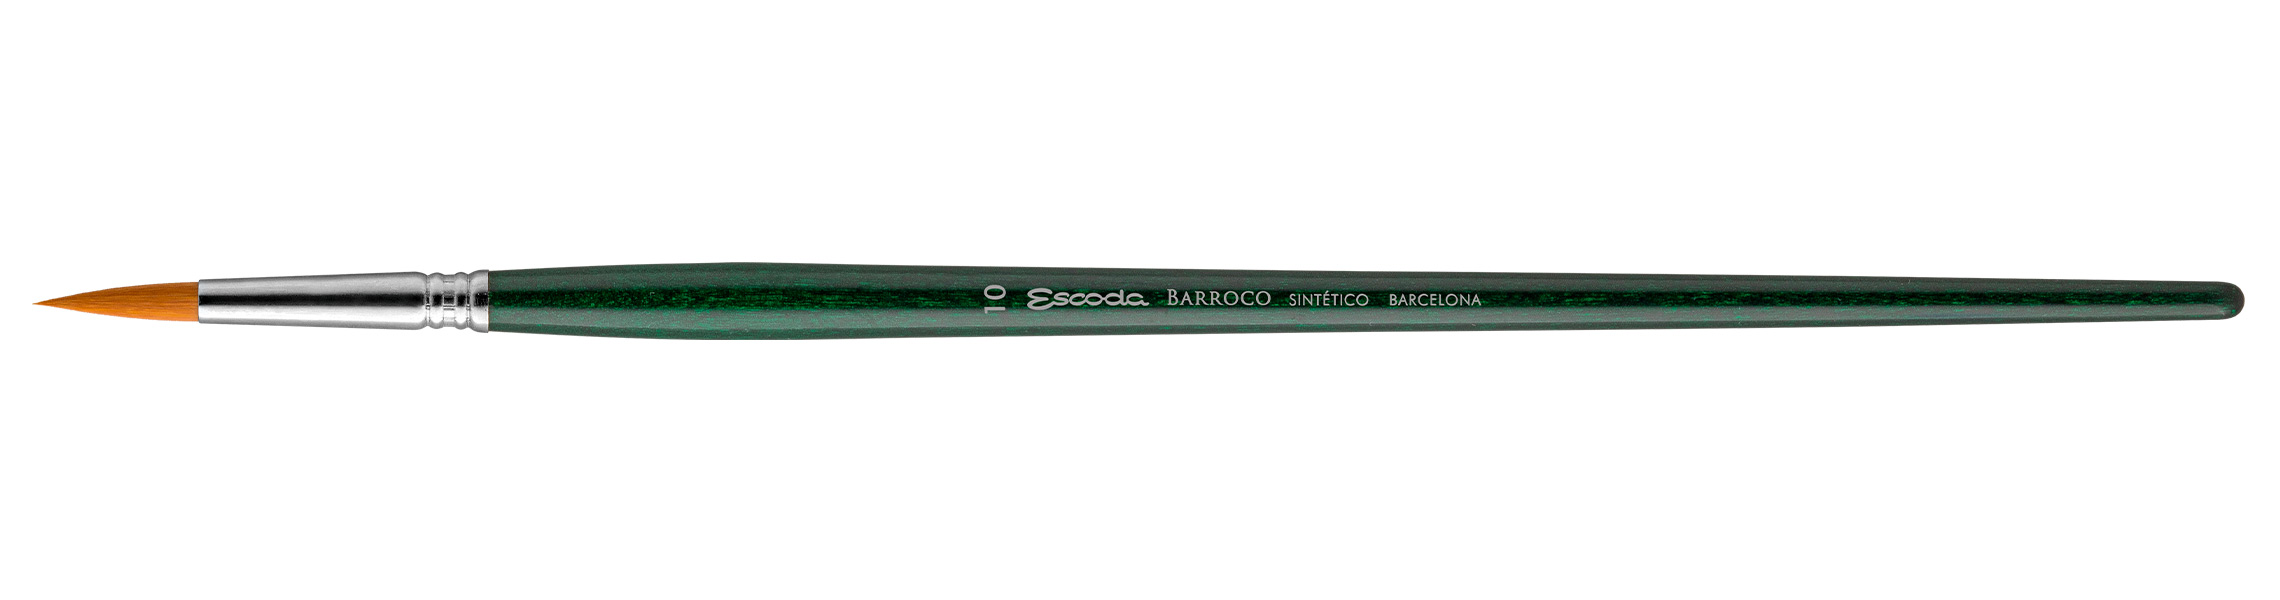 Escoda brushes serie 2511